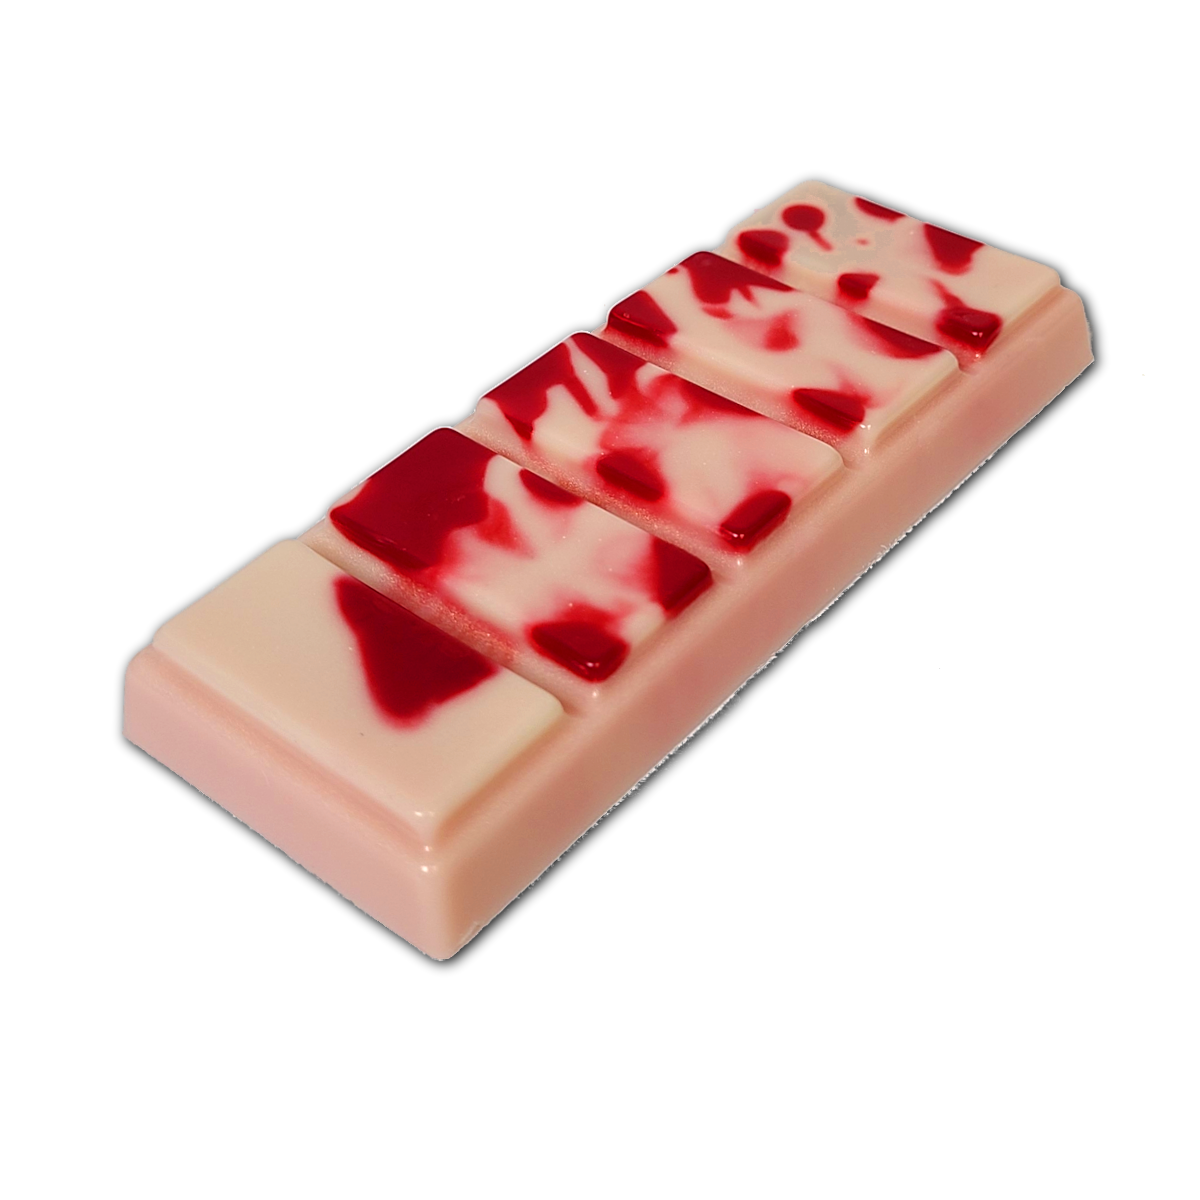 Strawberry Cheesecake Snap Bar - 1.8 oz Clamshell